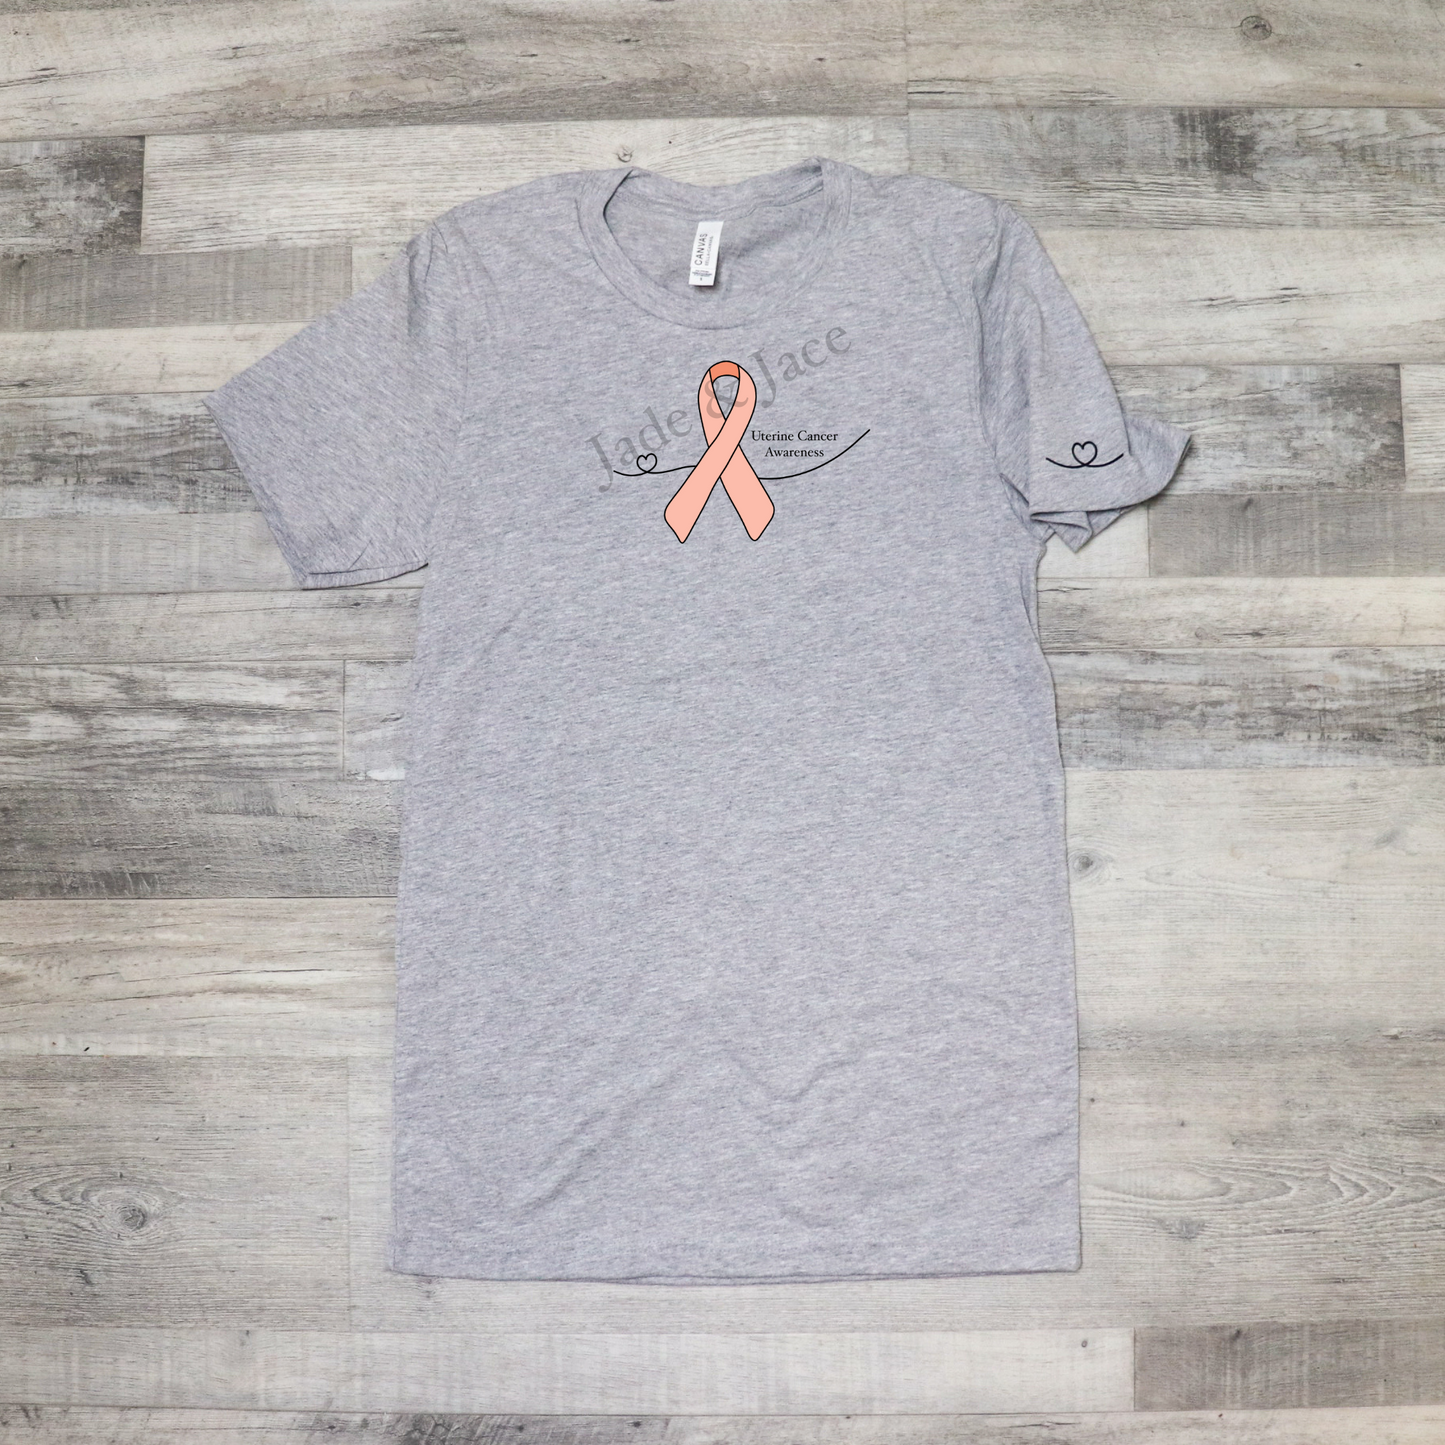 Uterine Cancer Awareness T-Shirt